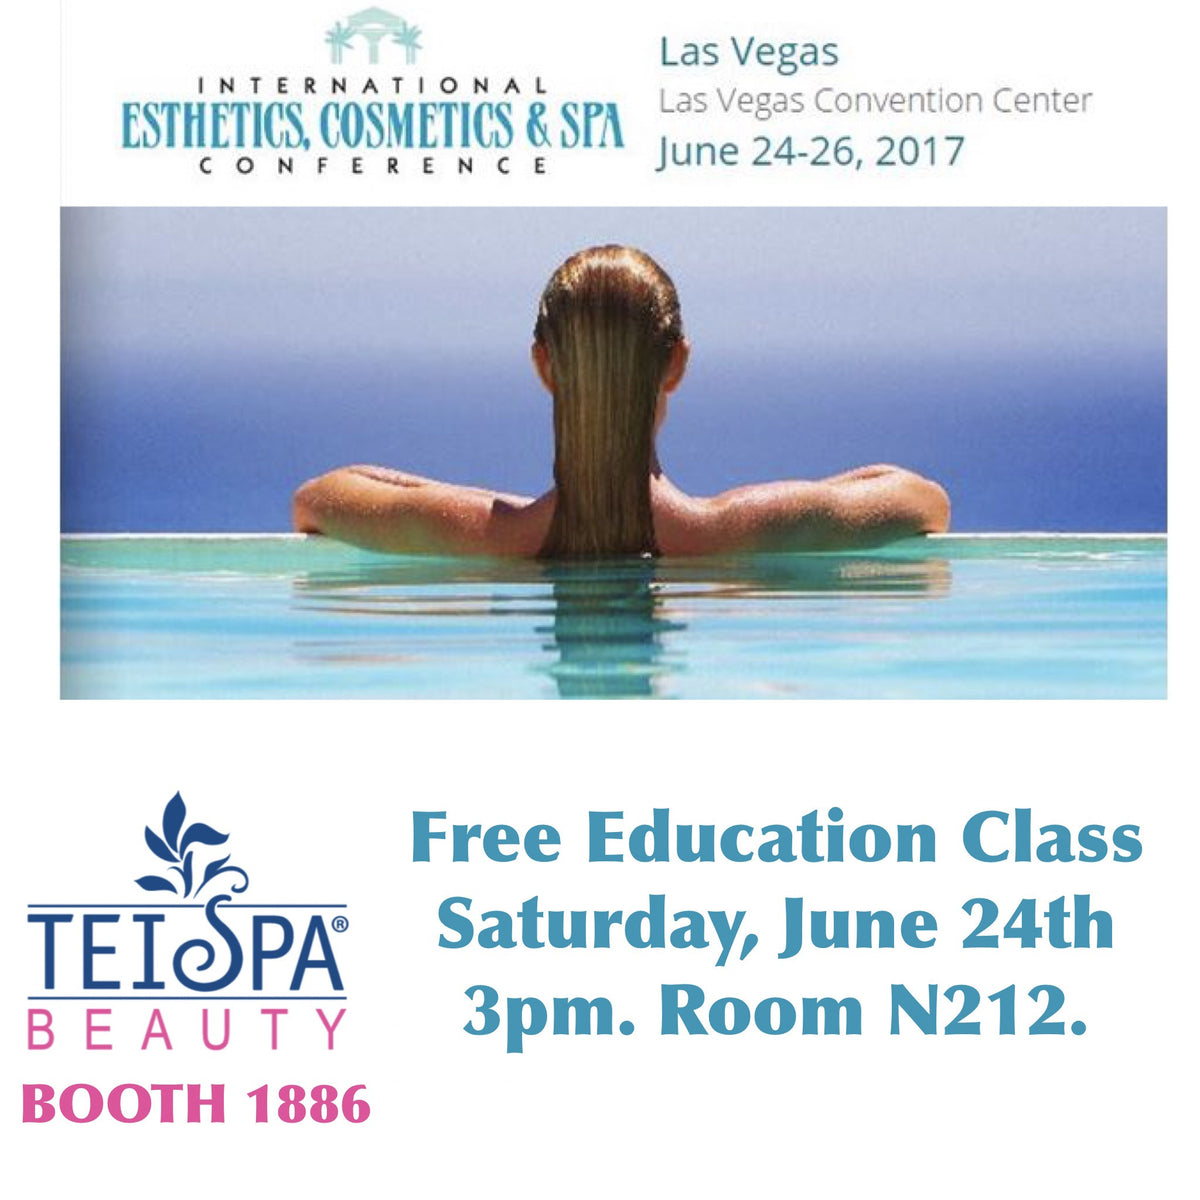 Calling All Professionals! IECSC Las Vegas - FREE Education - June 25-26